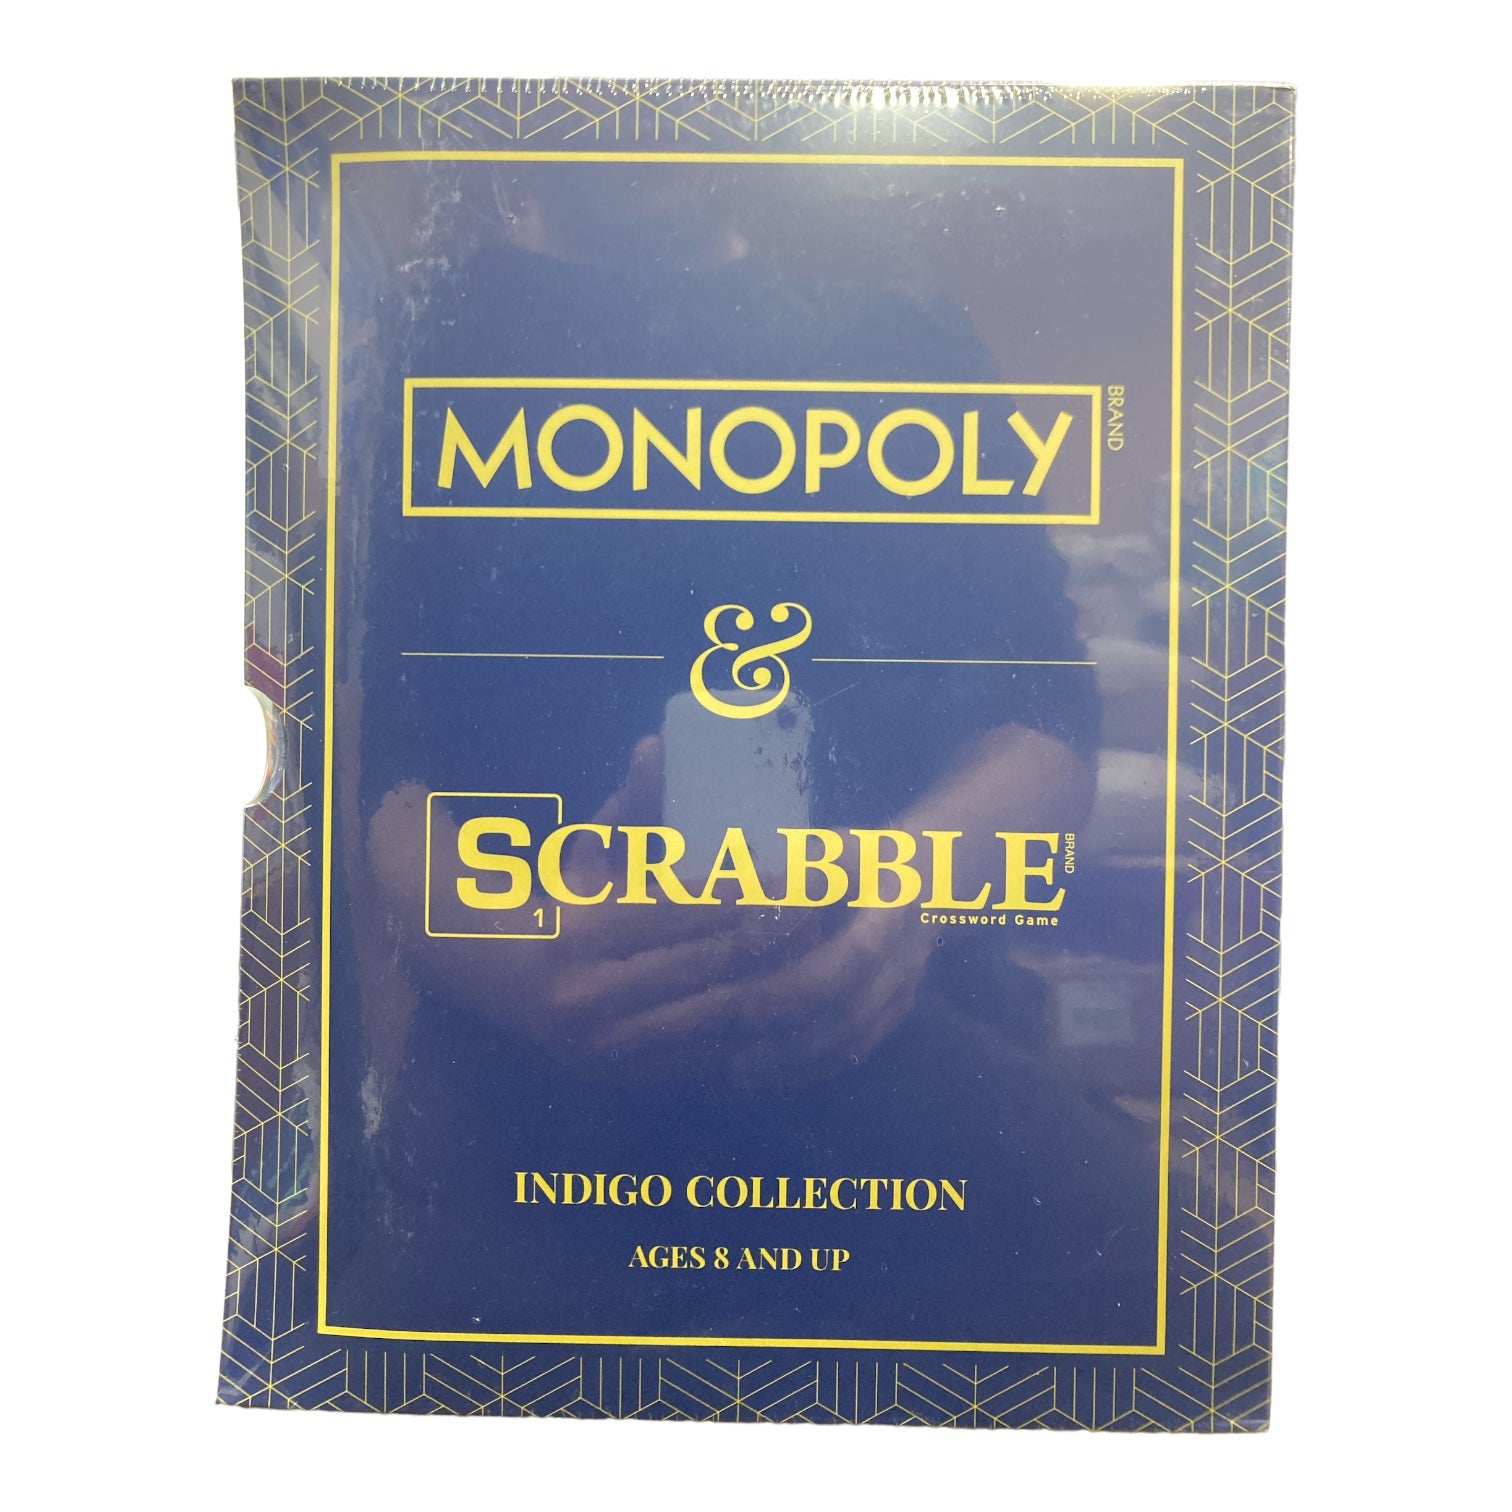 WS Game Company Indigo Collection Monopoly & Scrabble Board Games